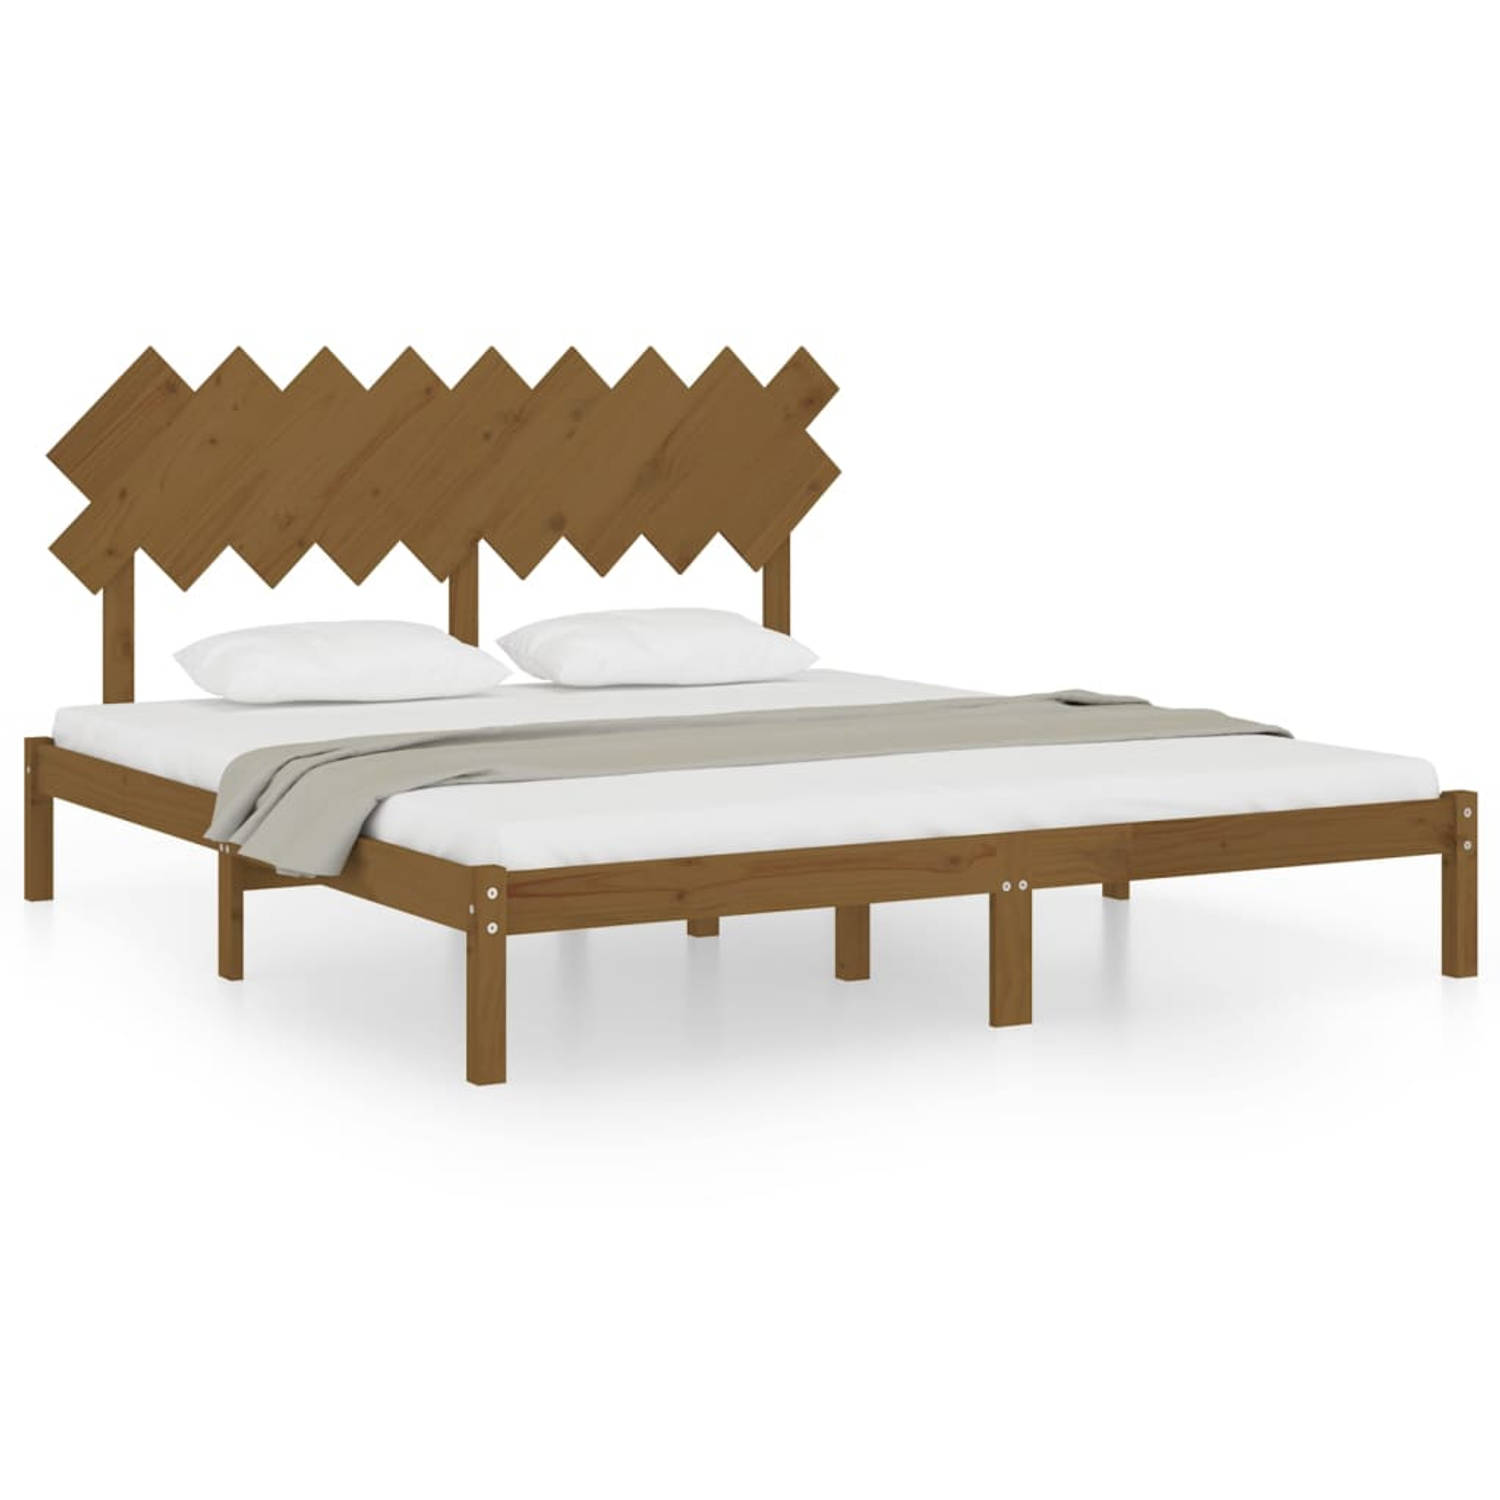 The Living Store Bedframe massief hout honingbruin 180x200 cm 6FT Super King - Bedframe - Bedframes - Bed - Bedbodem - Ledikant - Bed Frame - Massief Houten Bedframe - Slaapmeubel